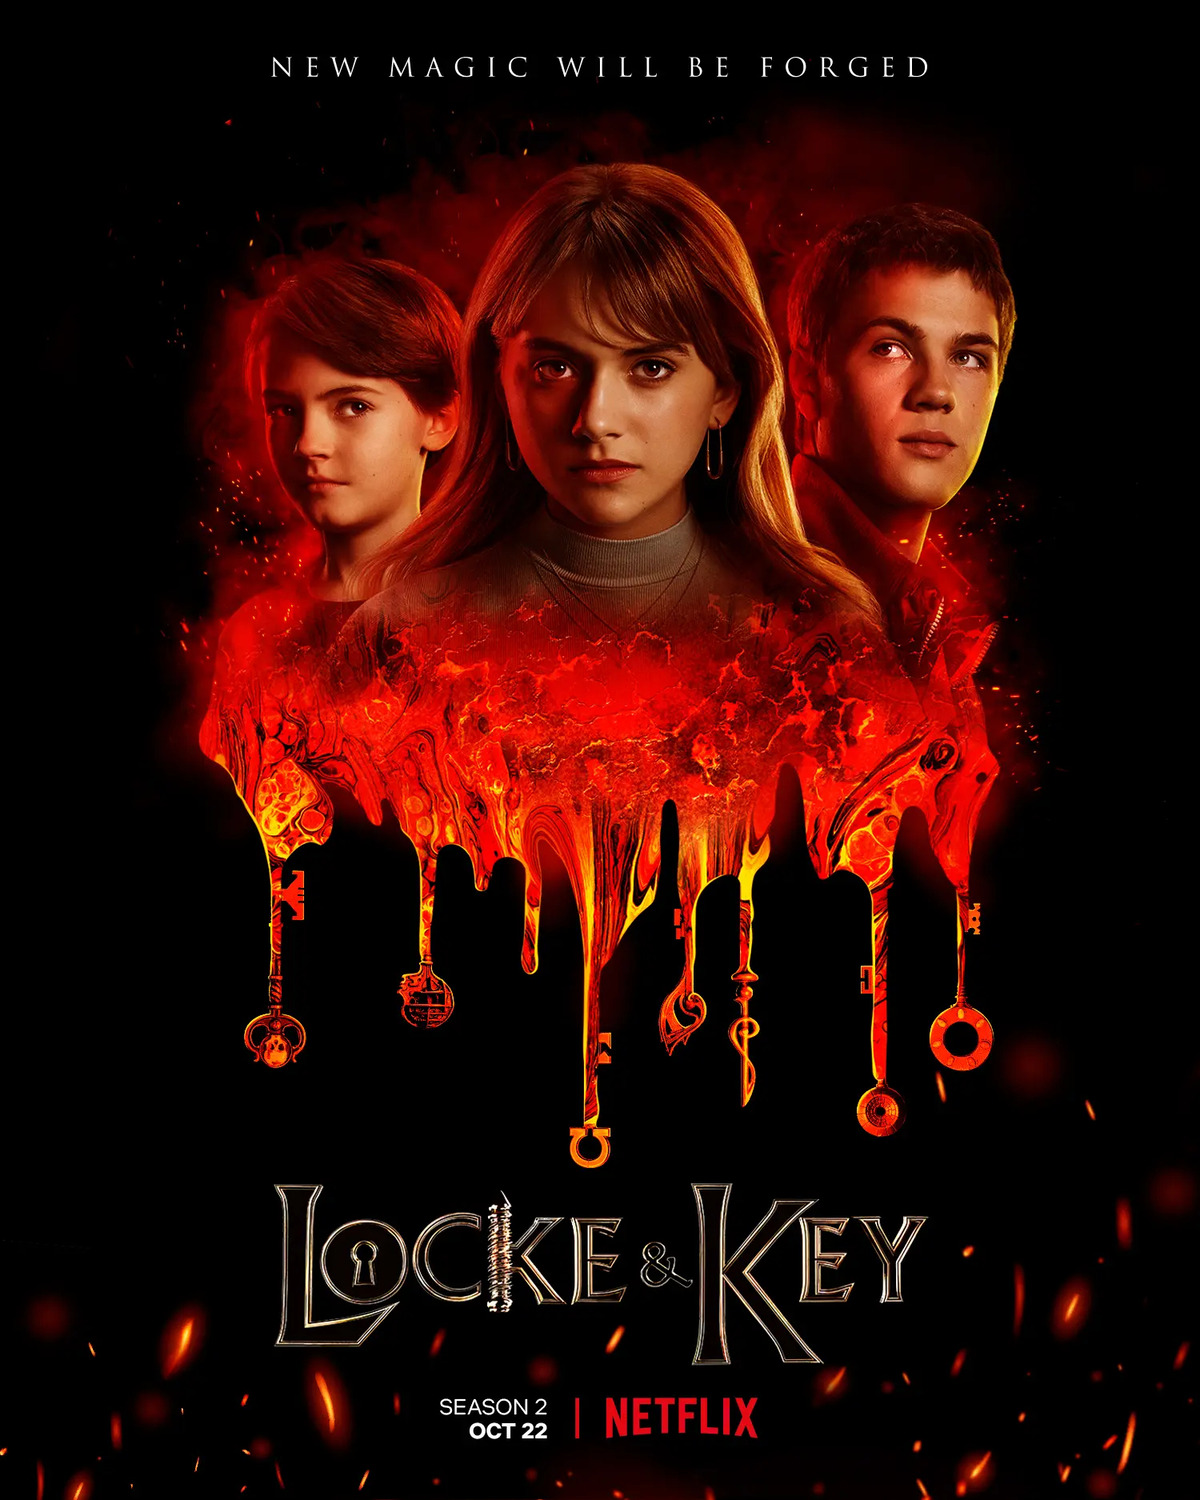 Extra Large TV Poster Image for Locke & Key (#14 of 16)